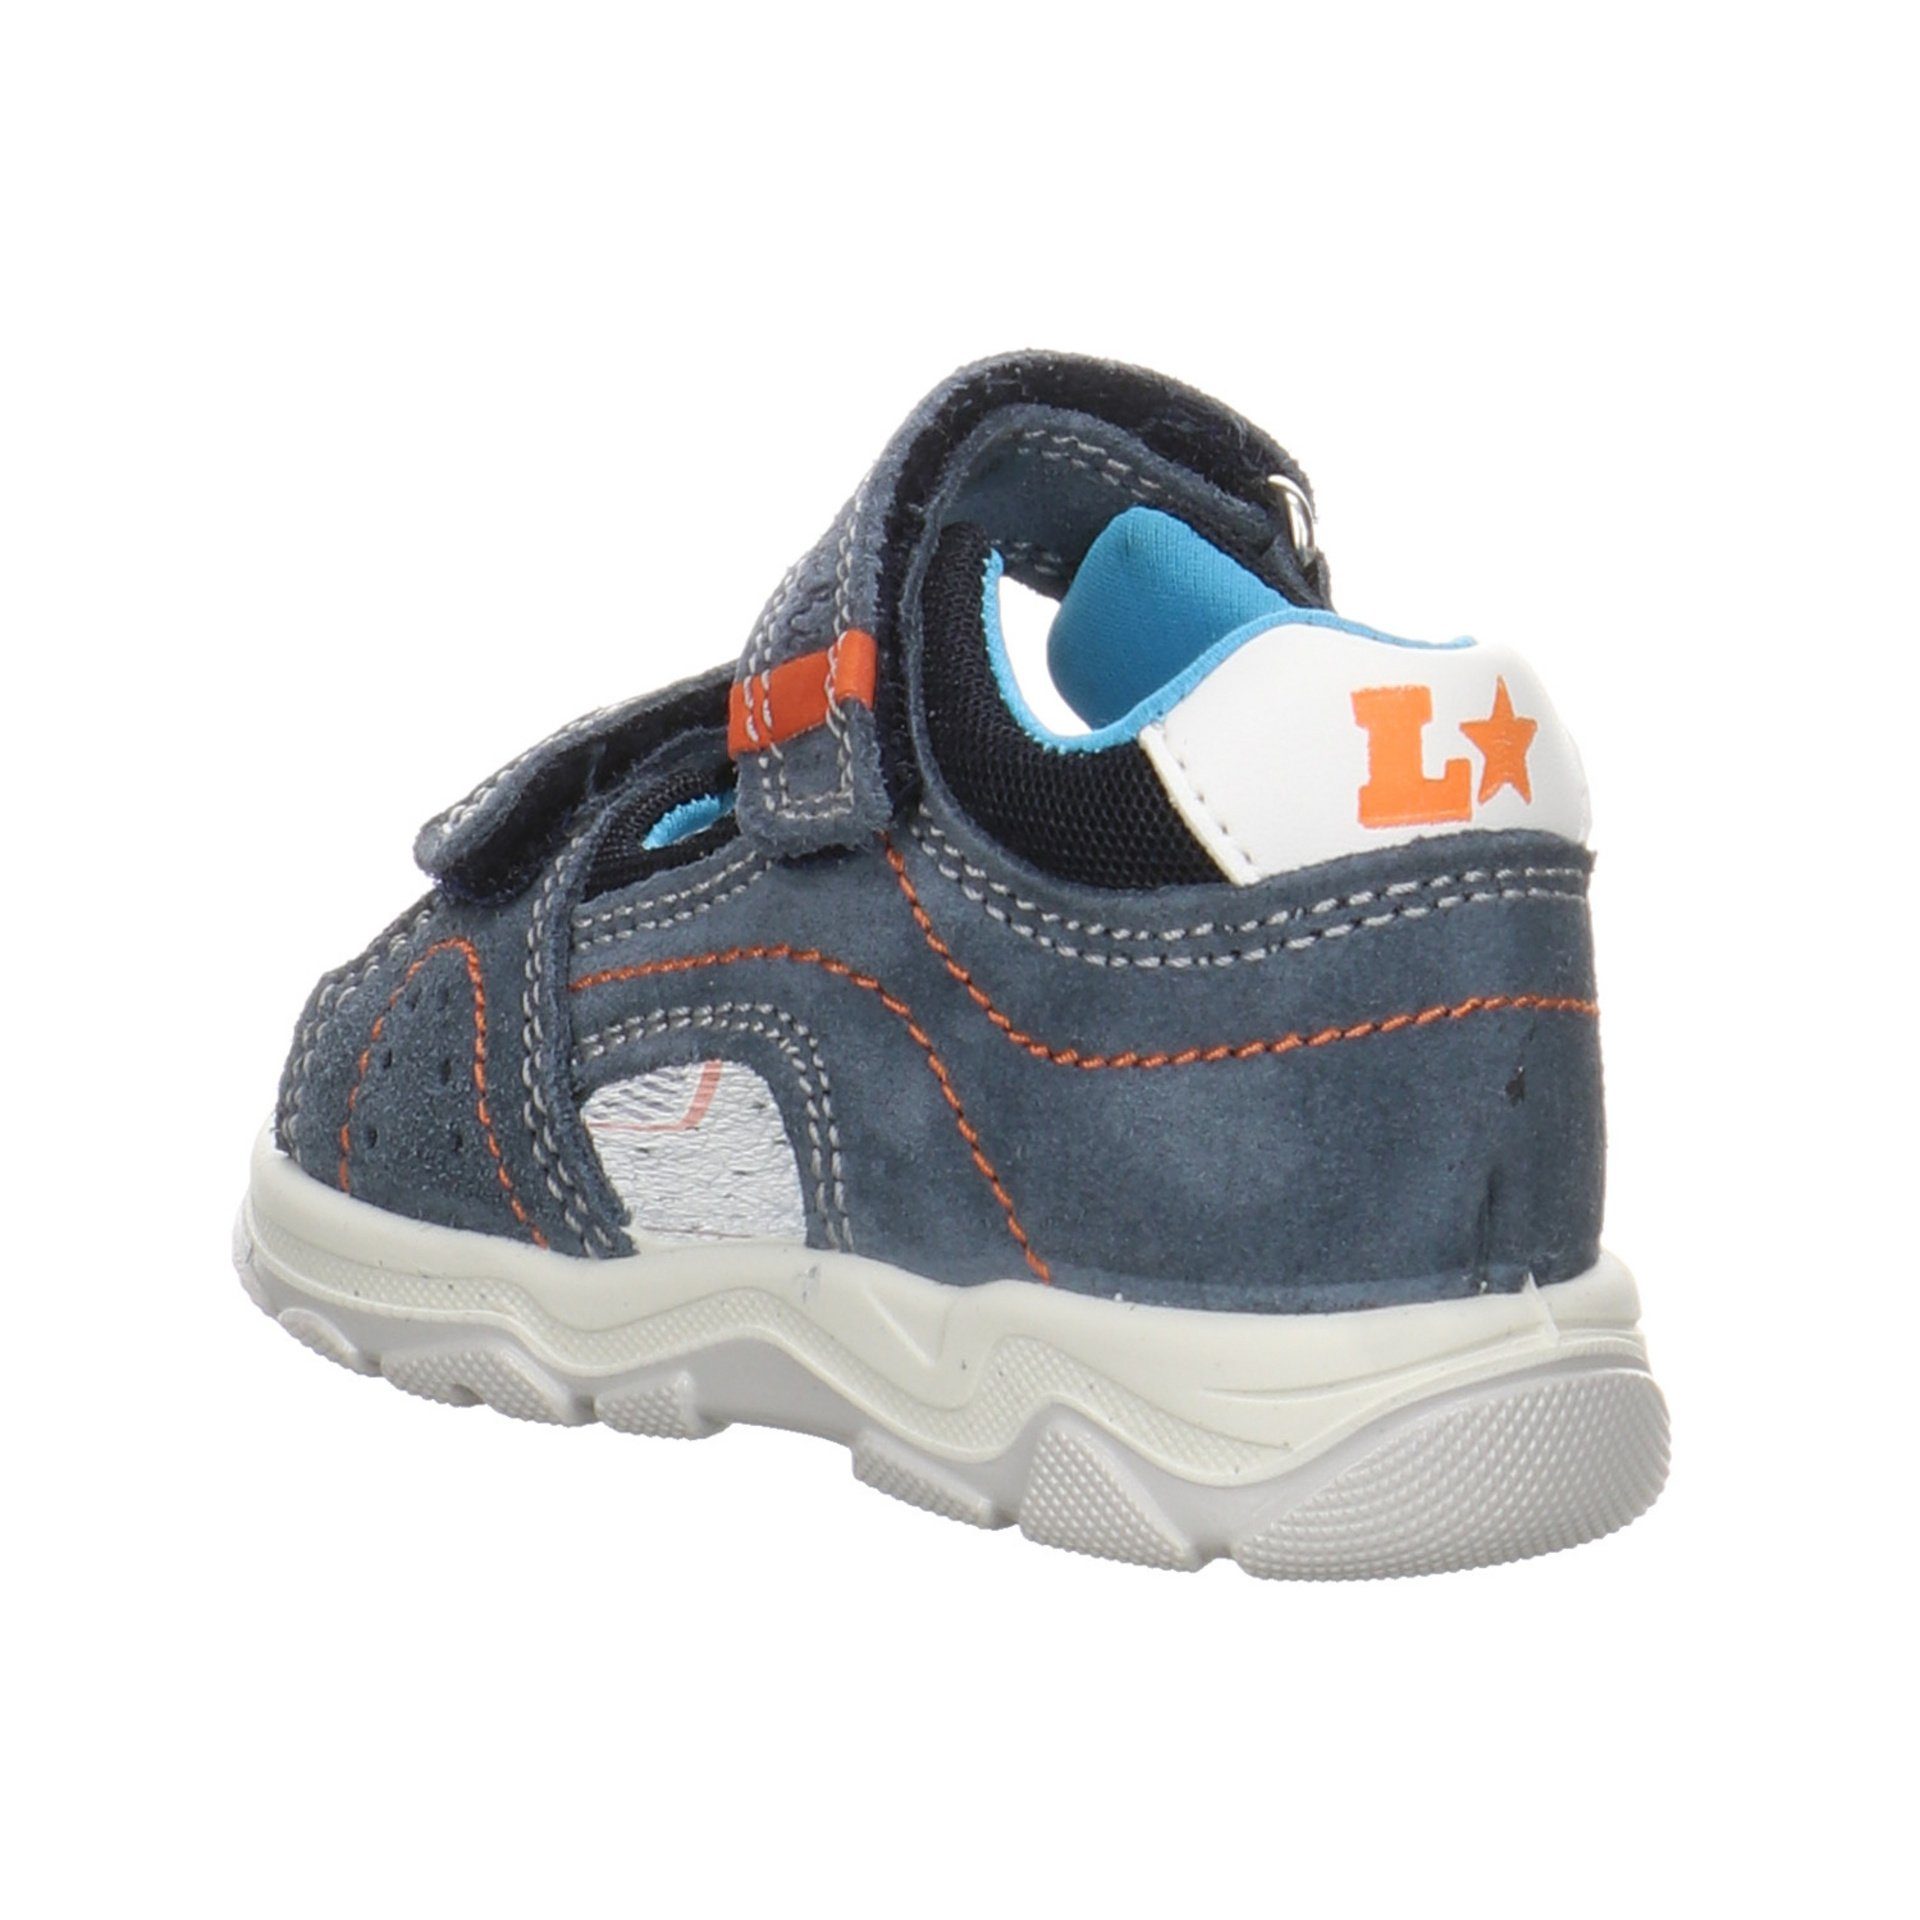 Lurchi Jungen Schuhe Kinderschuhe Leder-/Textilkombination Sandalen Minilette Sandale Gani Azzuro